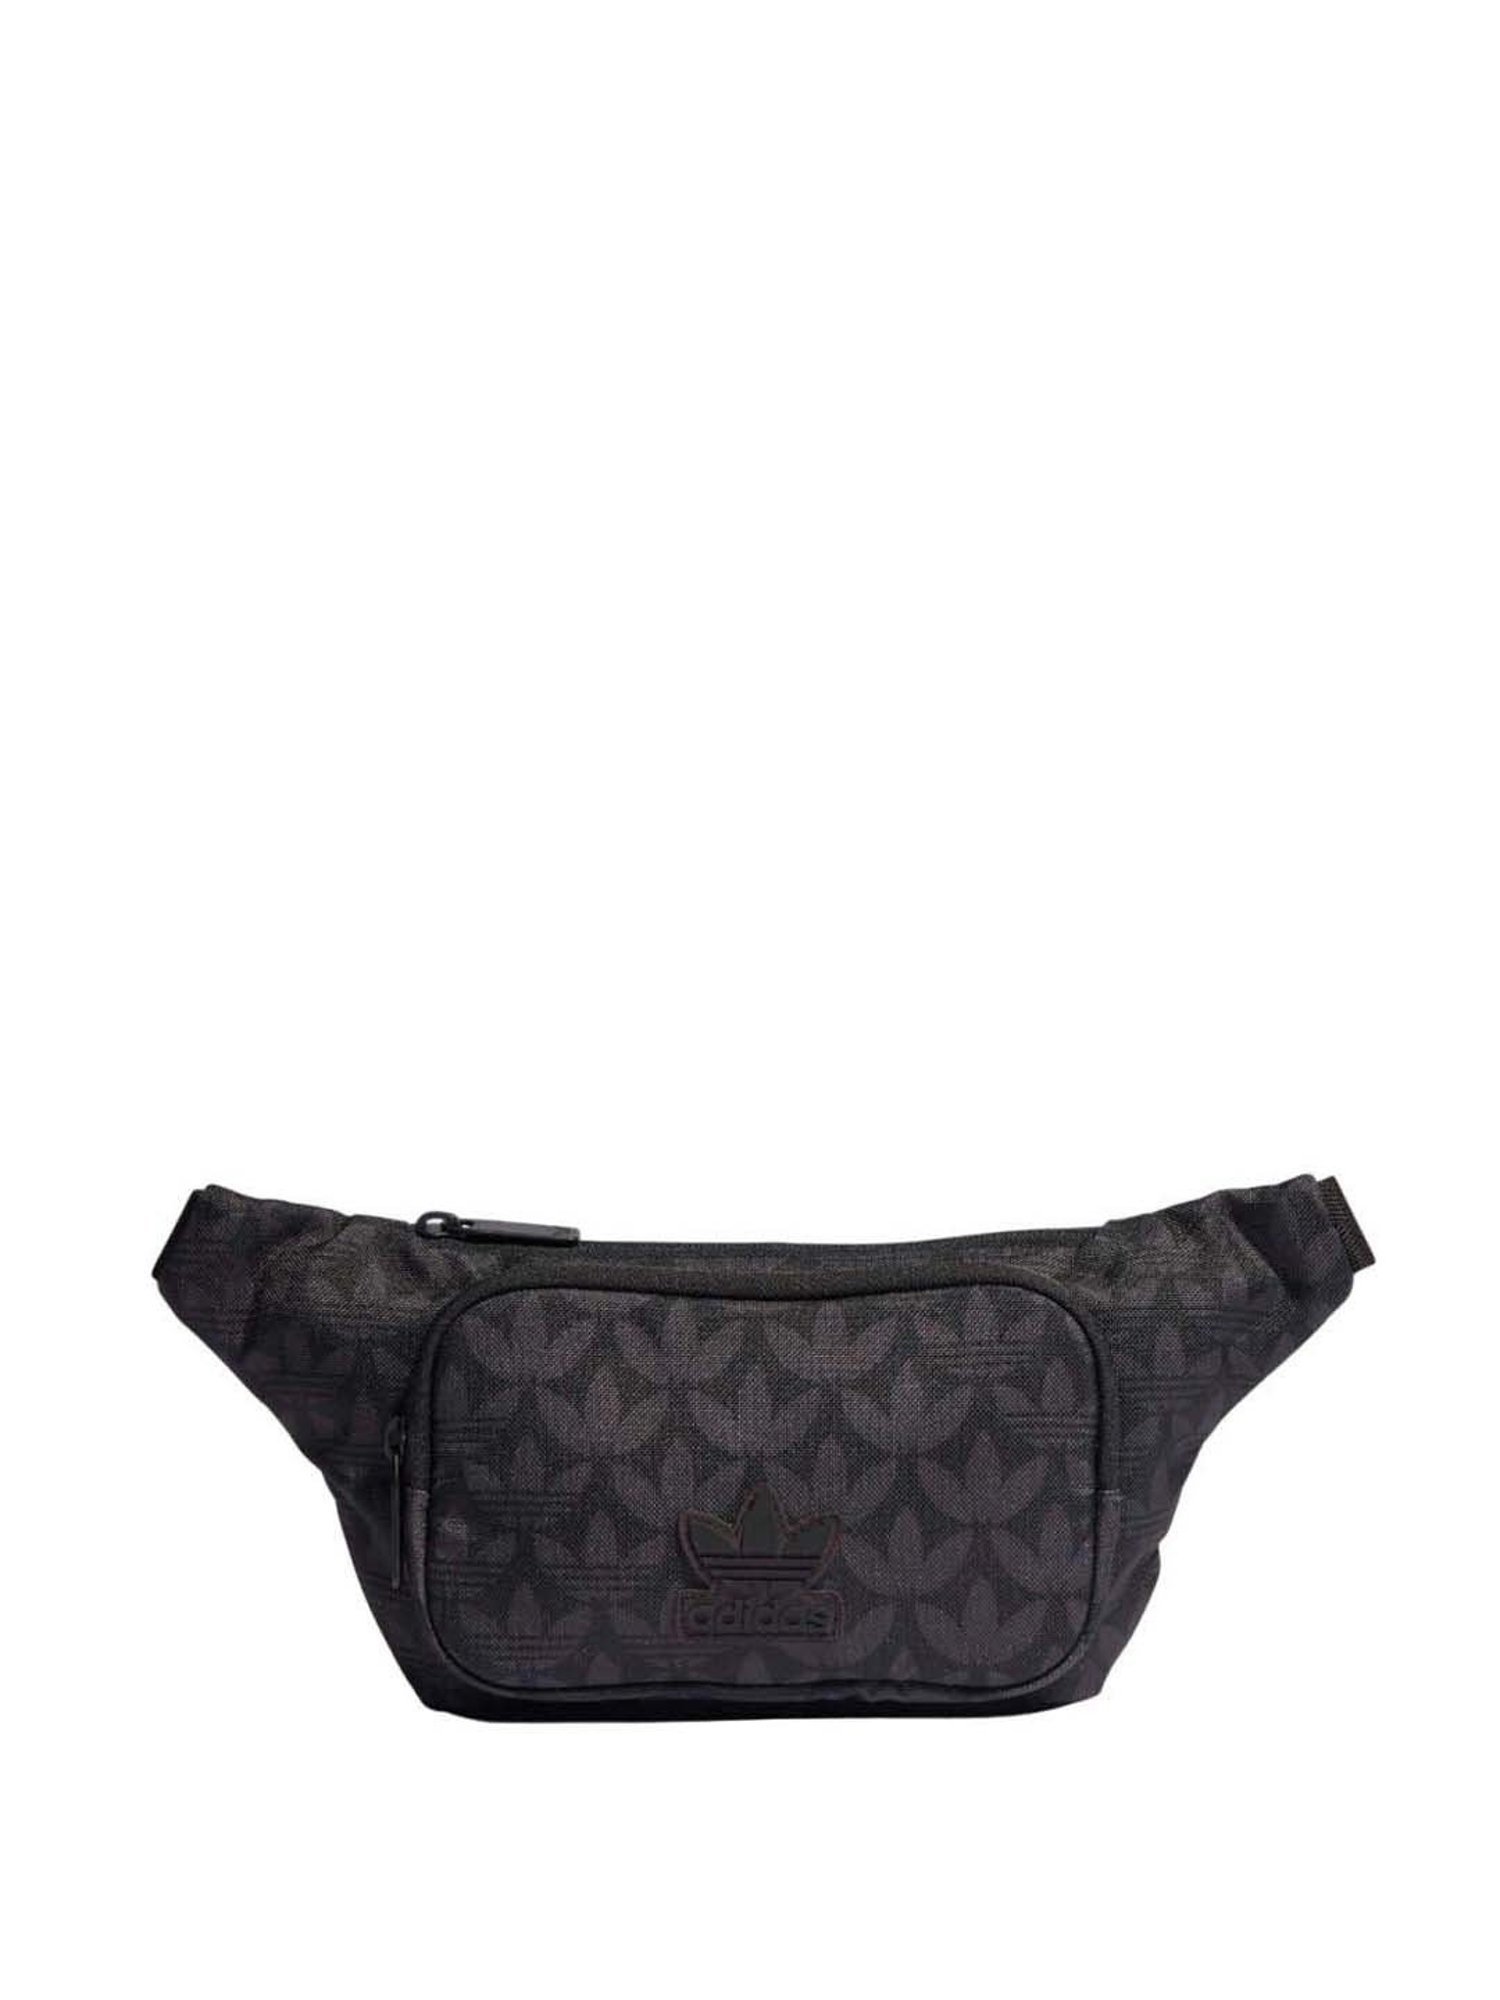 Louis Vuitton Monogram Fanny Pack Waist Bum Bag (2020)